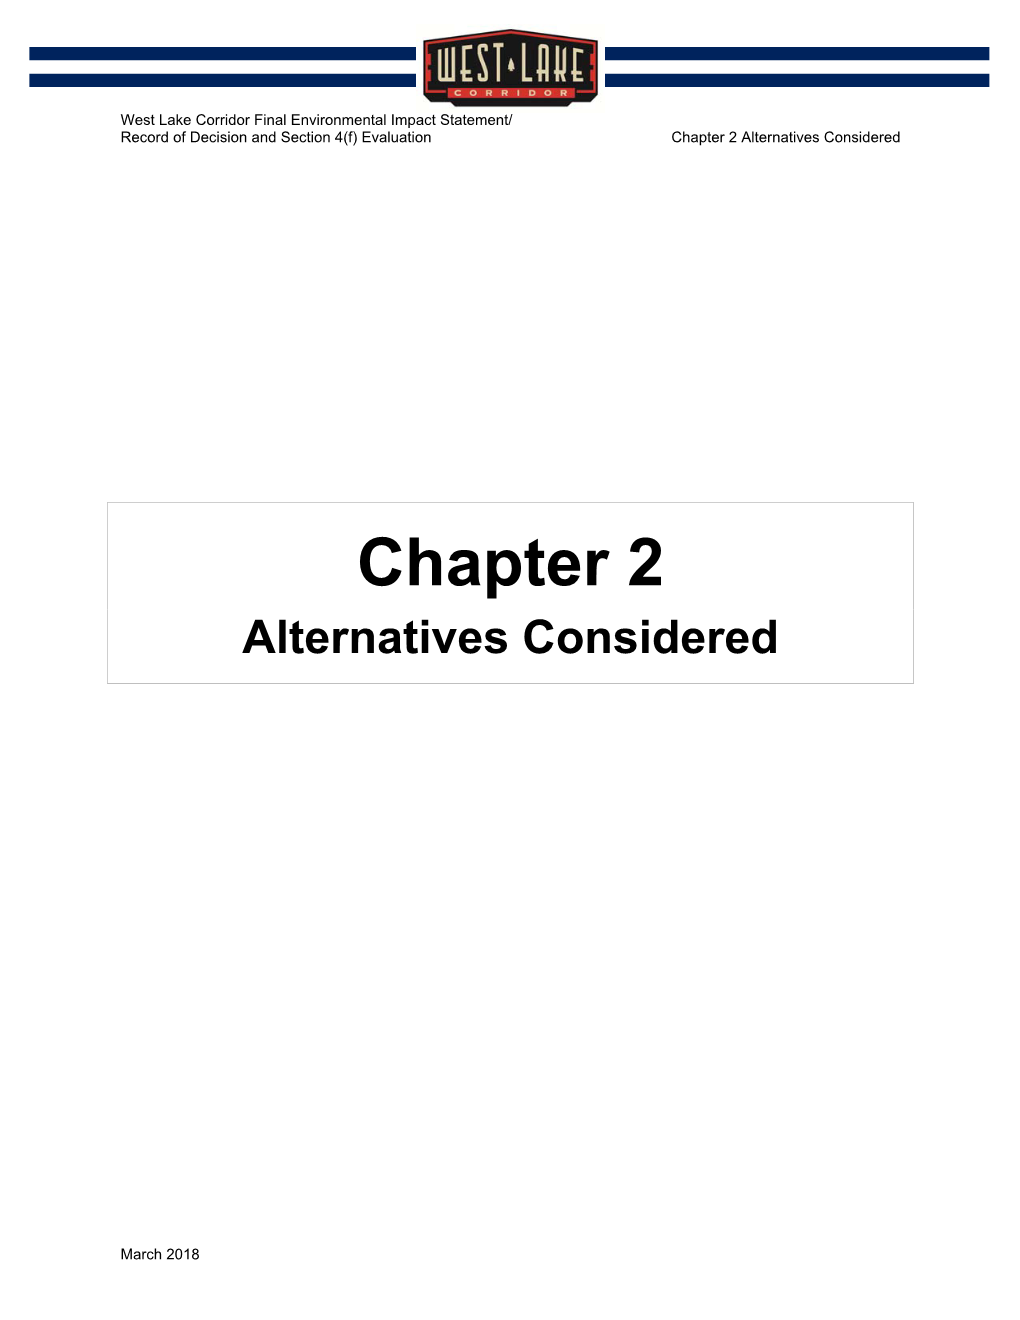 Chapter 2 Alternatives Considered